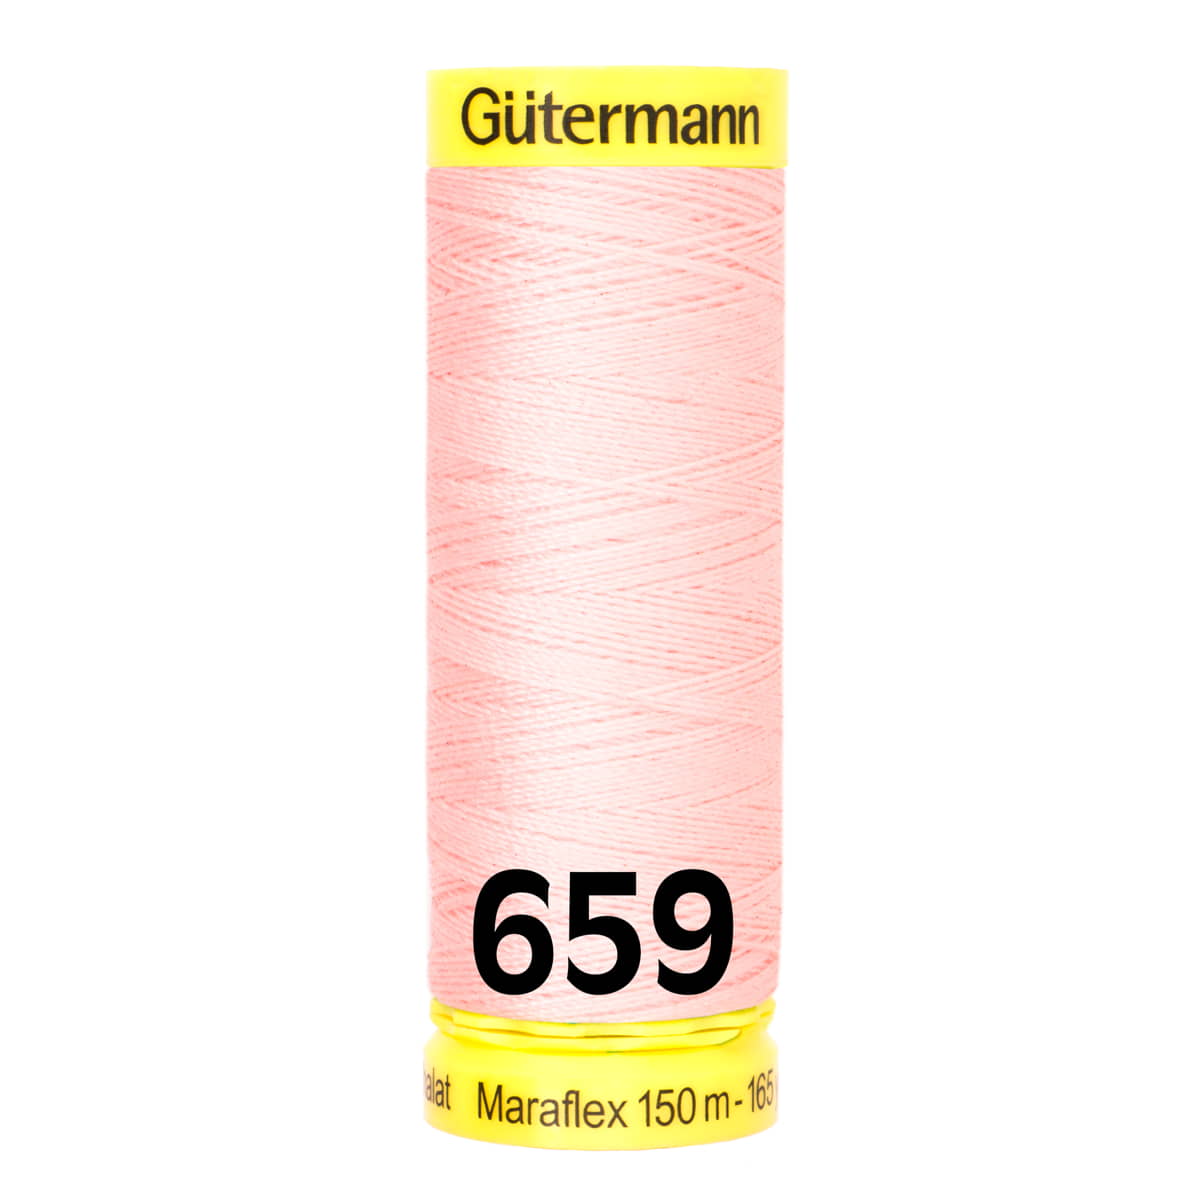 Gütermann MaraFlex 150m - 659 licht roze GUTERMANN-MARAFLEX-150-659 4029394998539 - Fourniturenkraam.nl